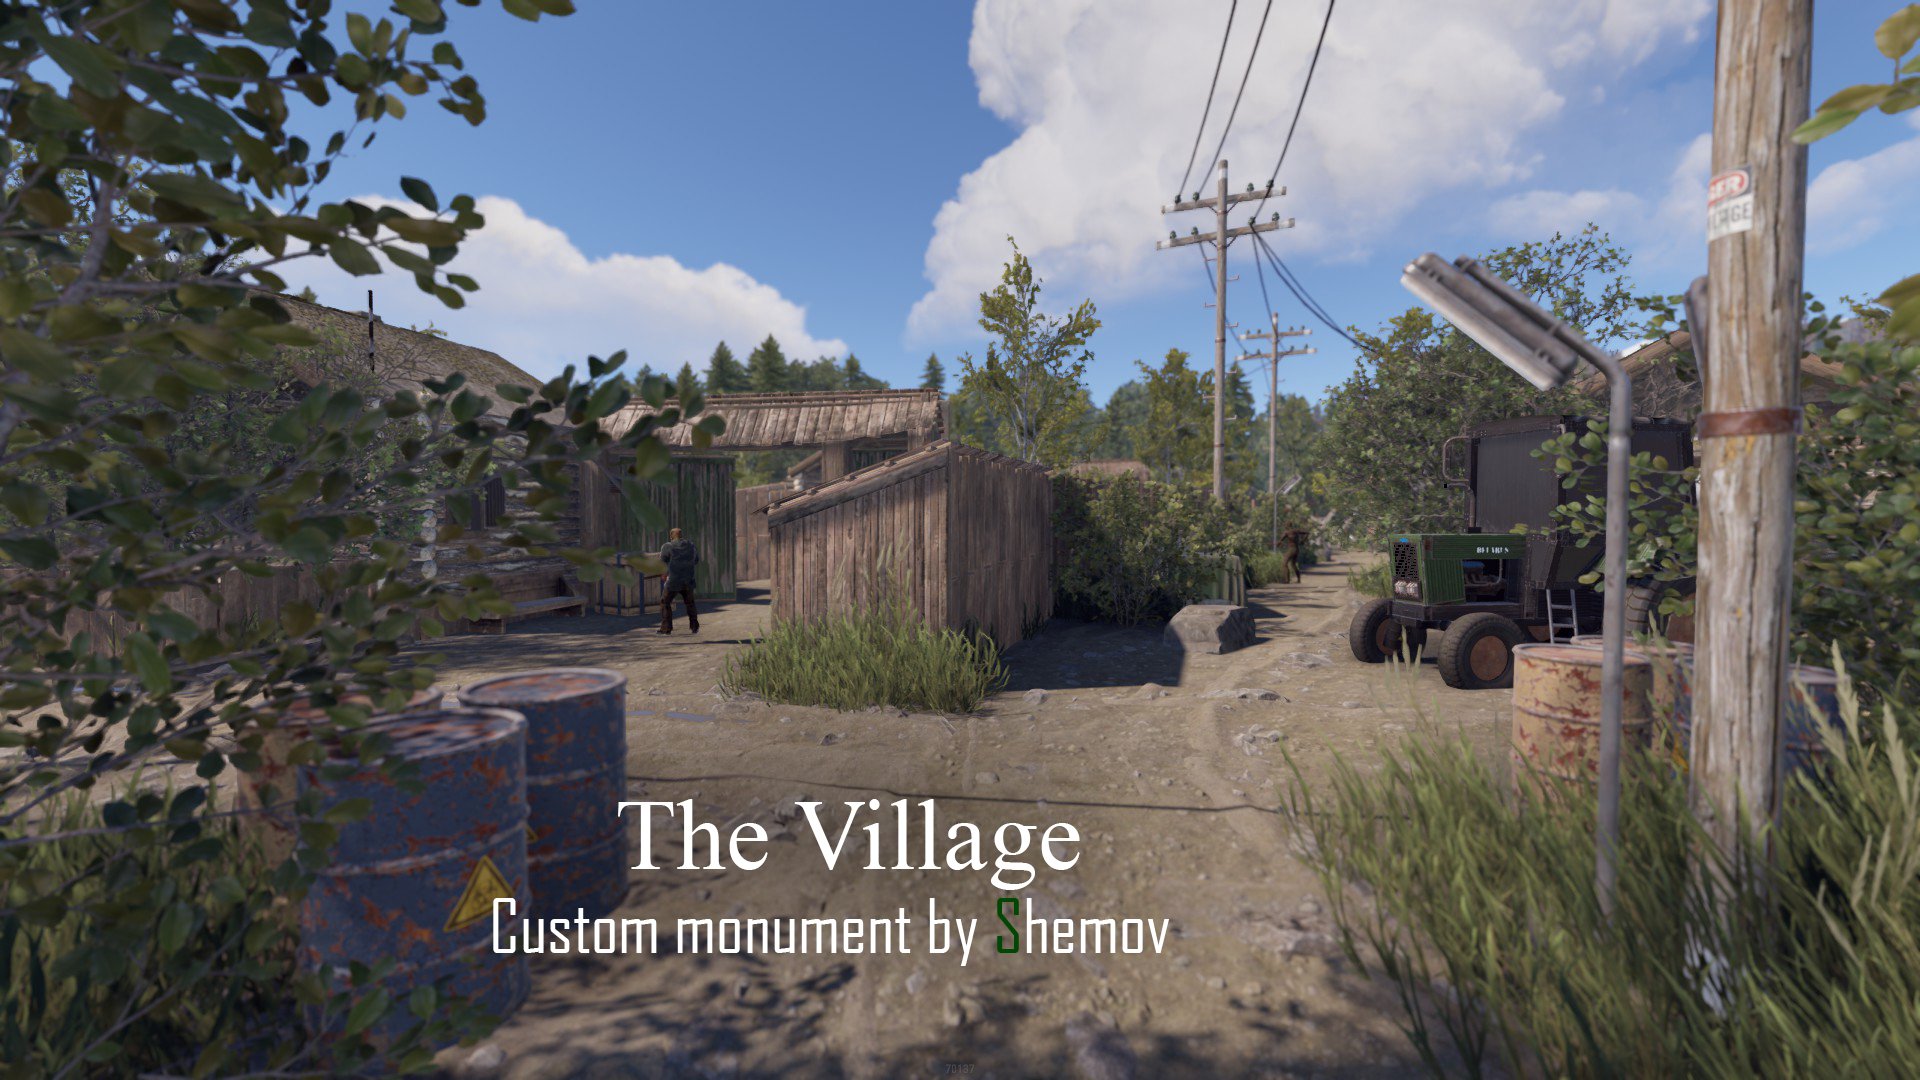 The Village | Custom monument by Shemov